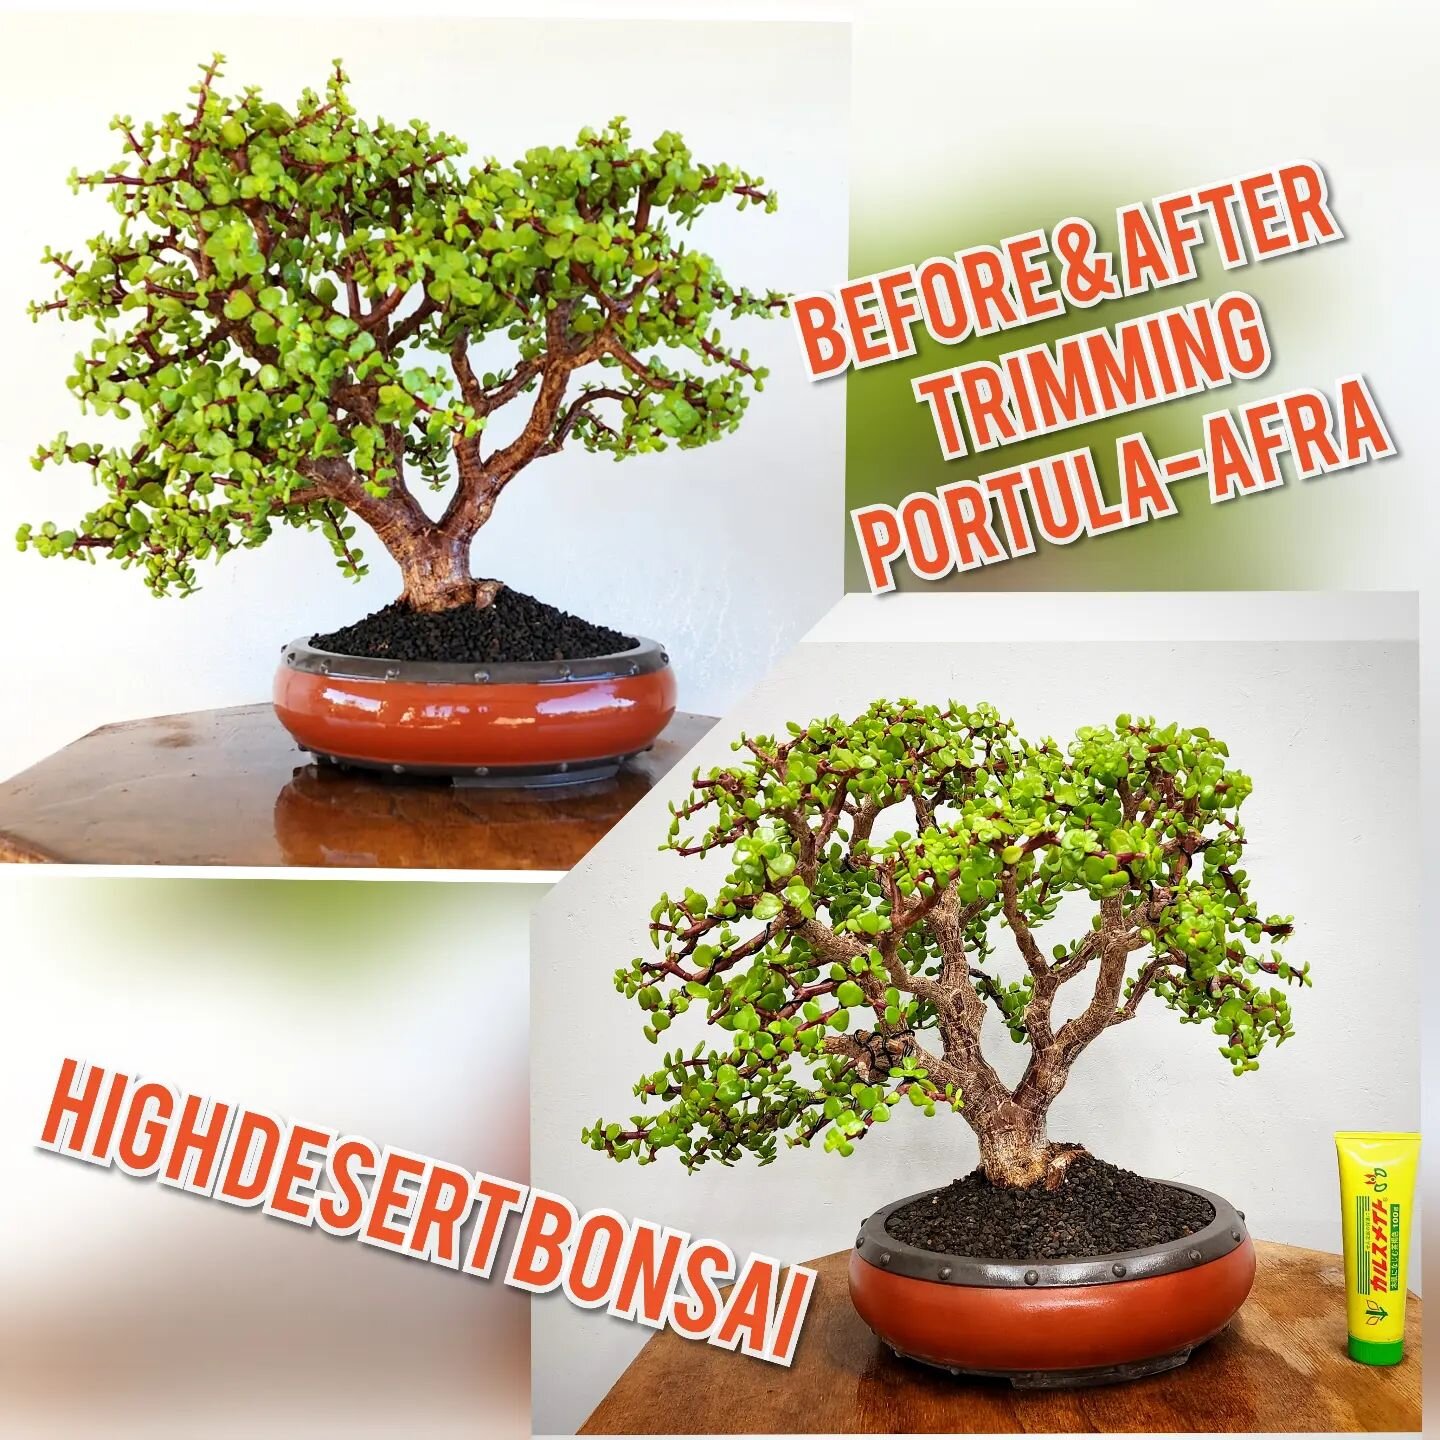 #highdesertbonsai
#bonsai
#weetrees